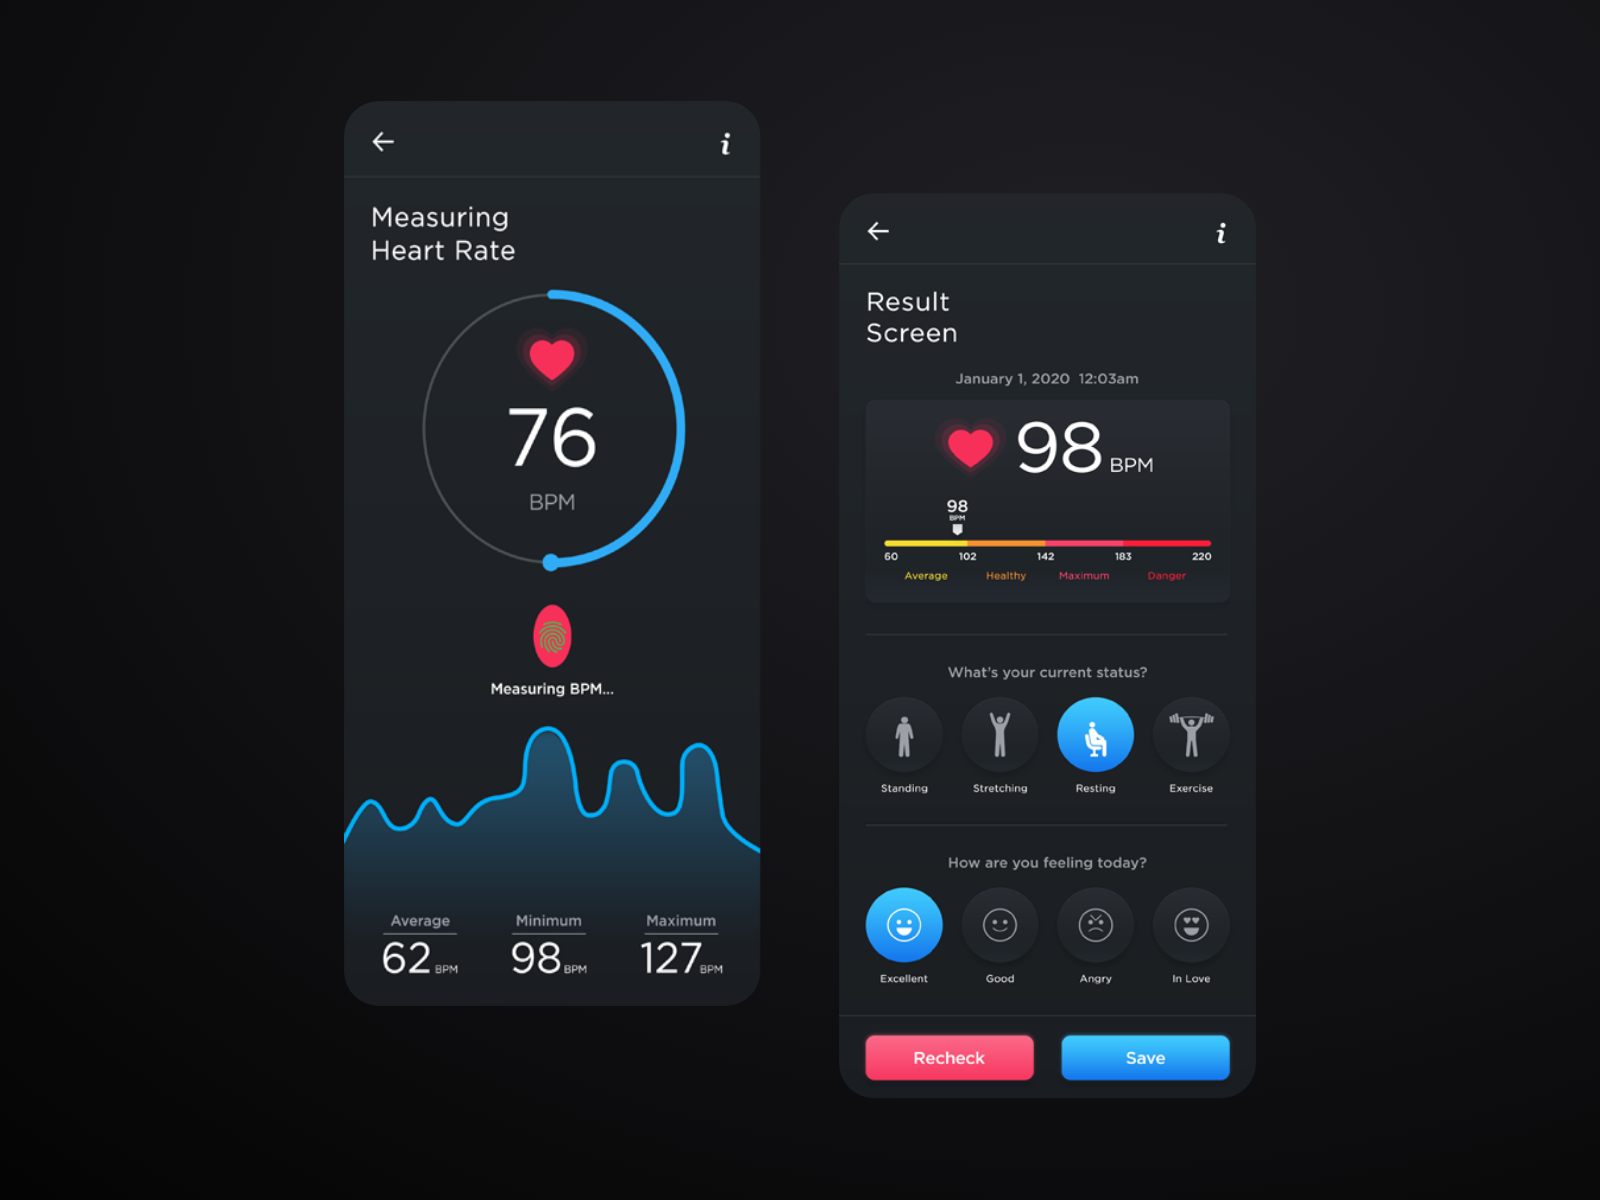 heartbeat monitor app